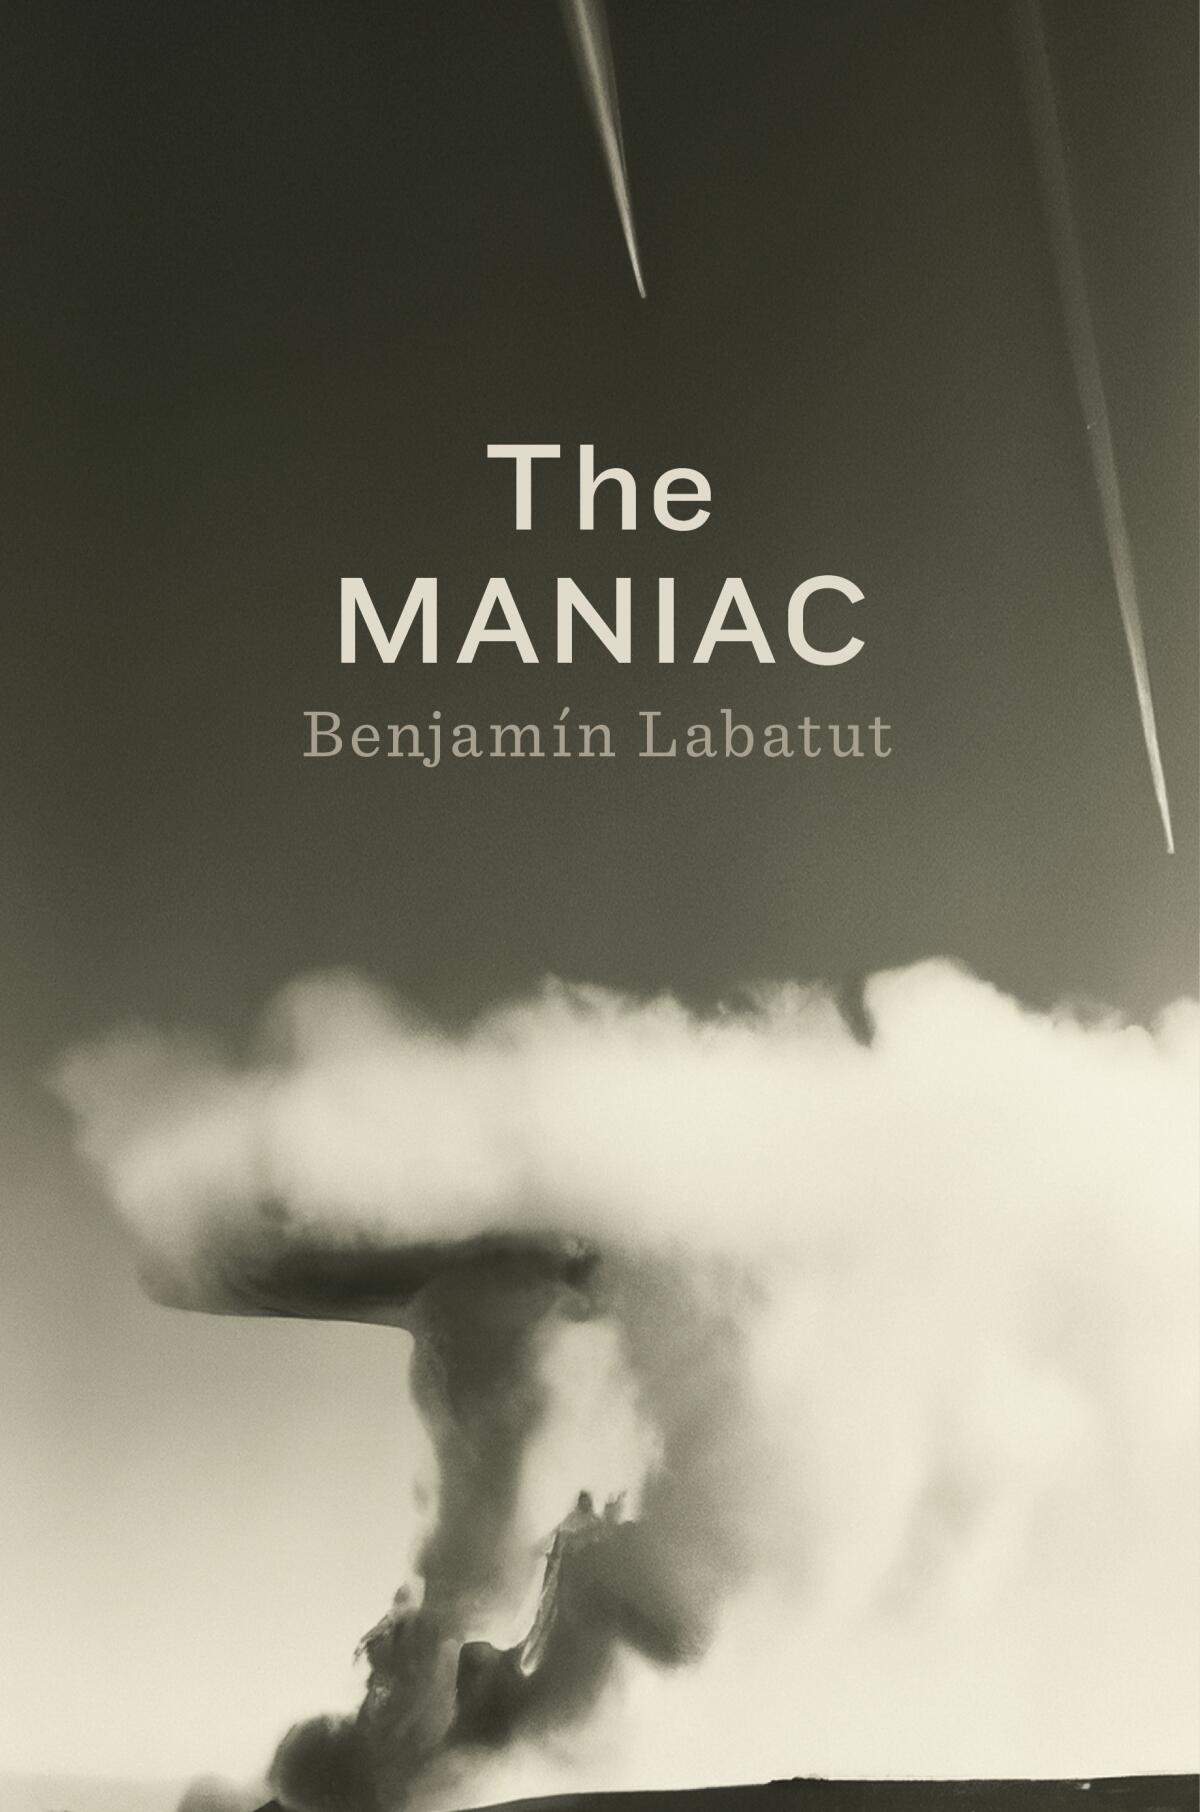 "The MANIAC," by Benjamin Labatut